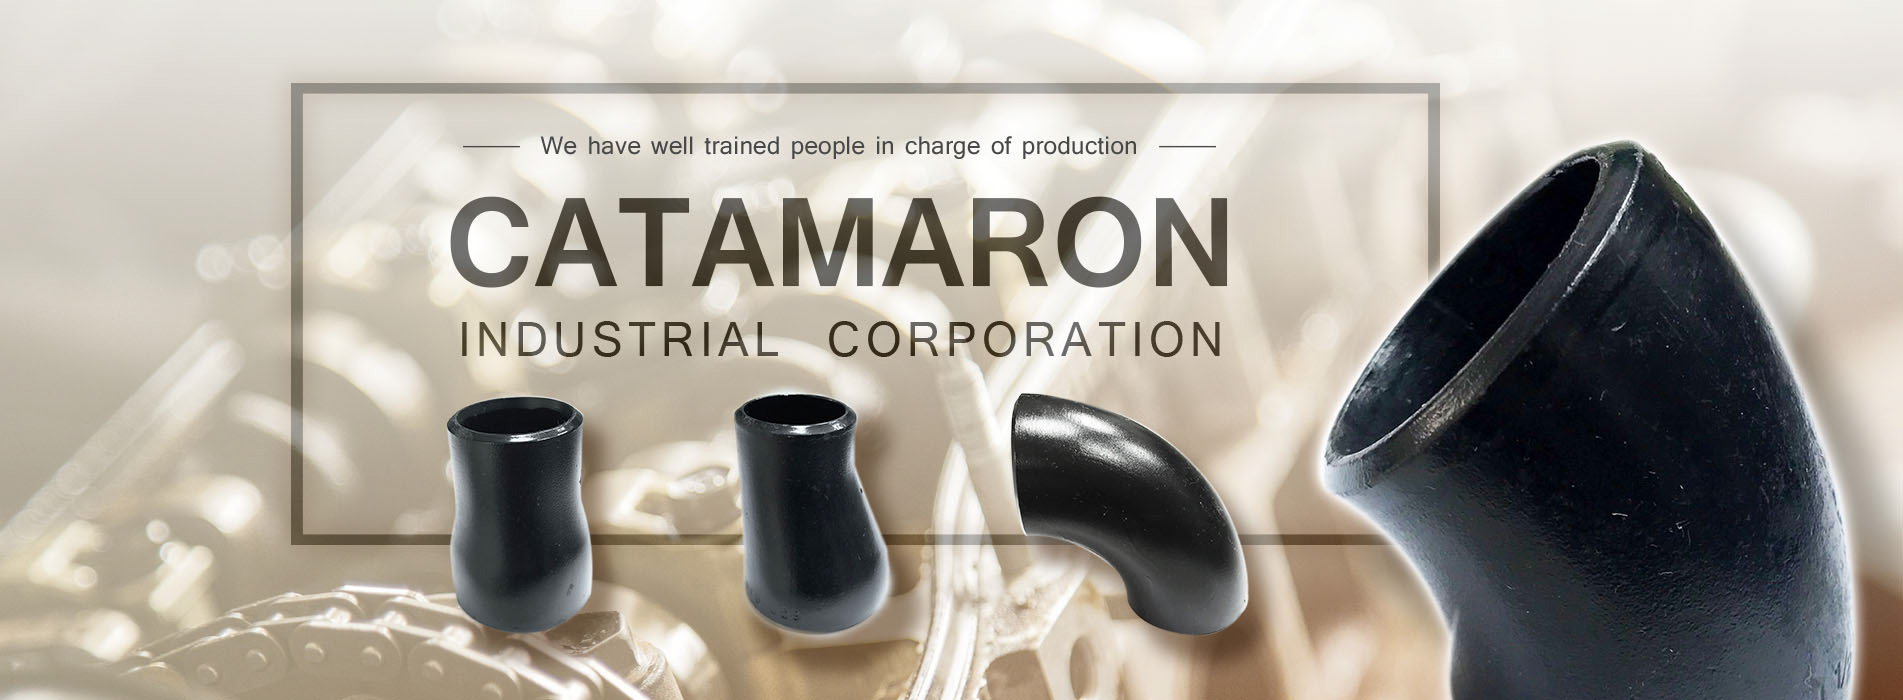 Catamaron Industrial Corporation...